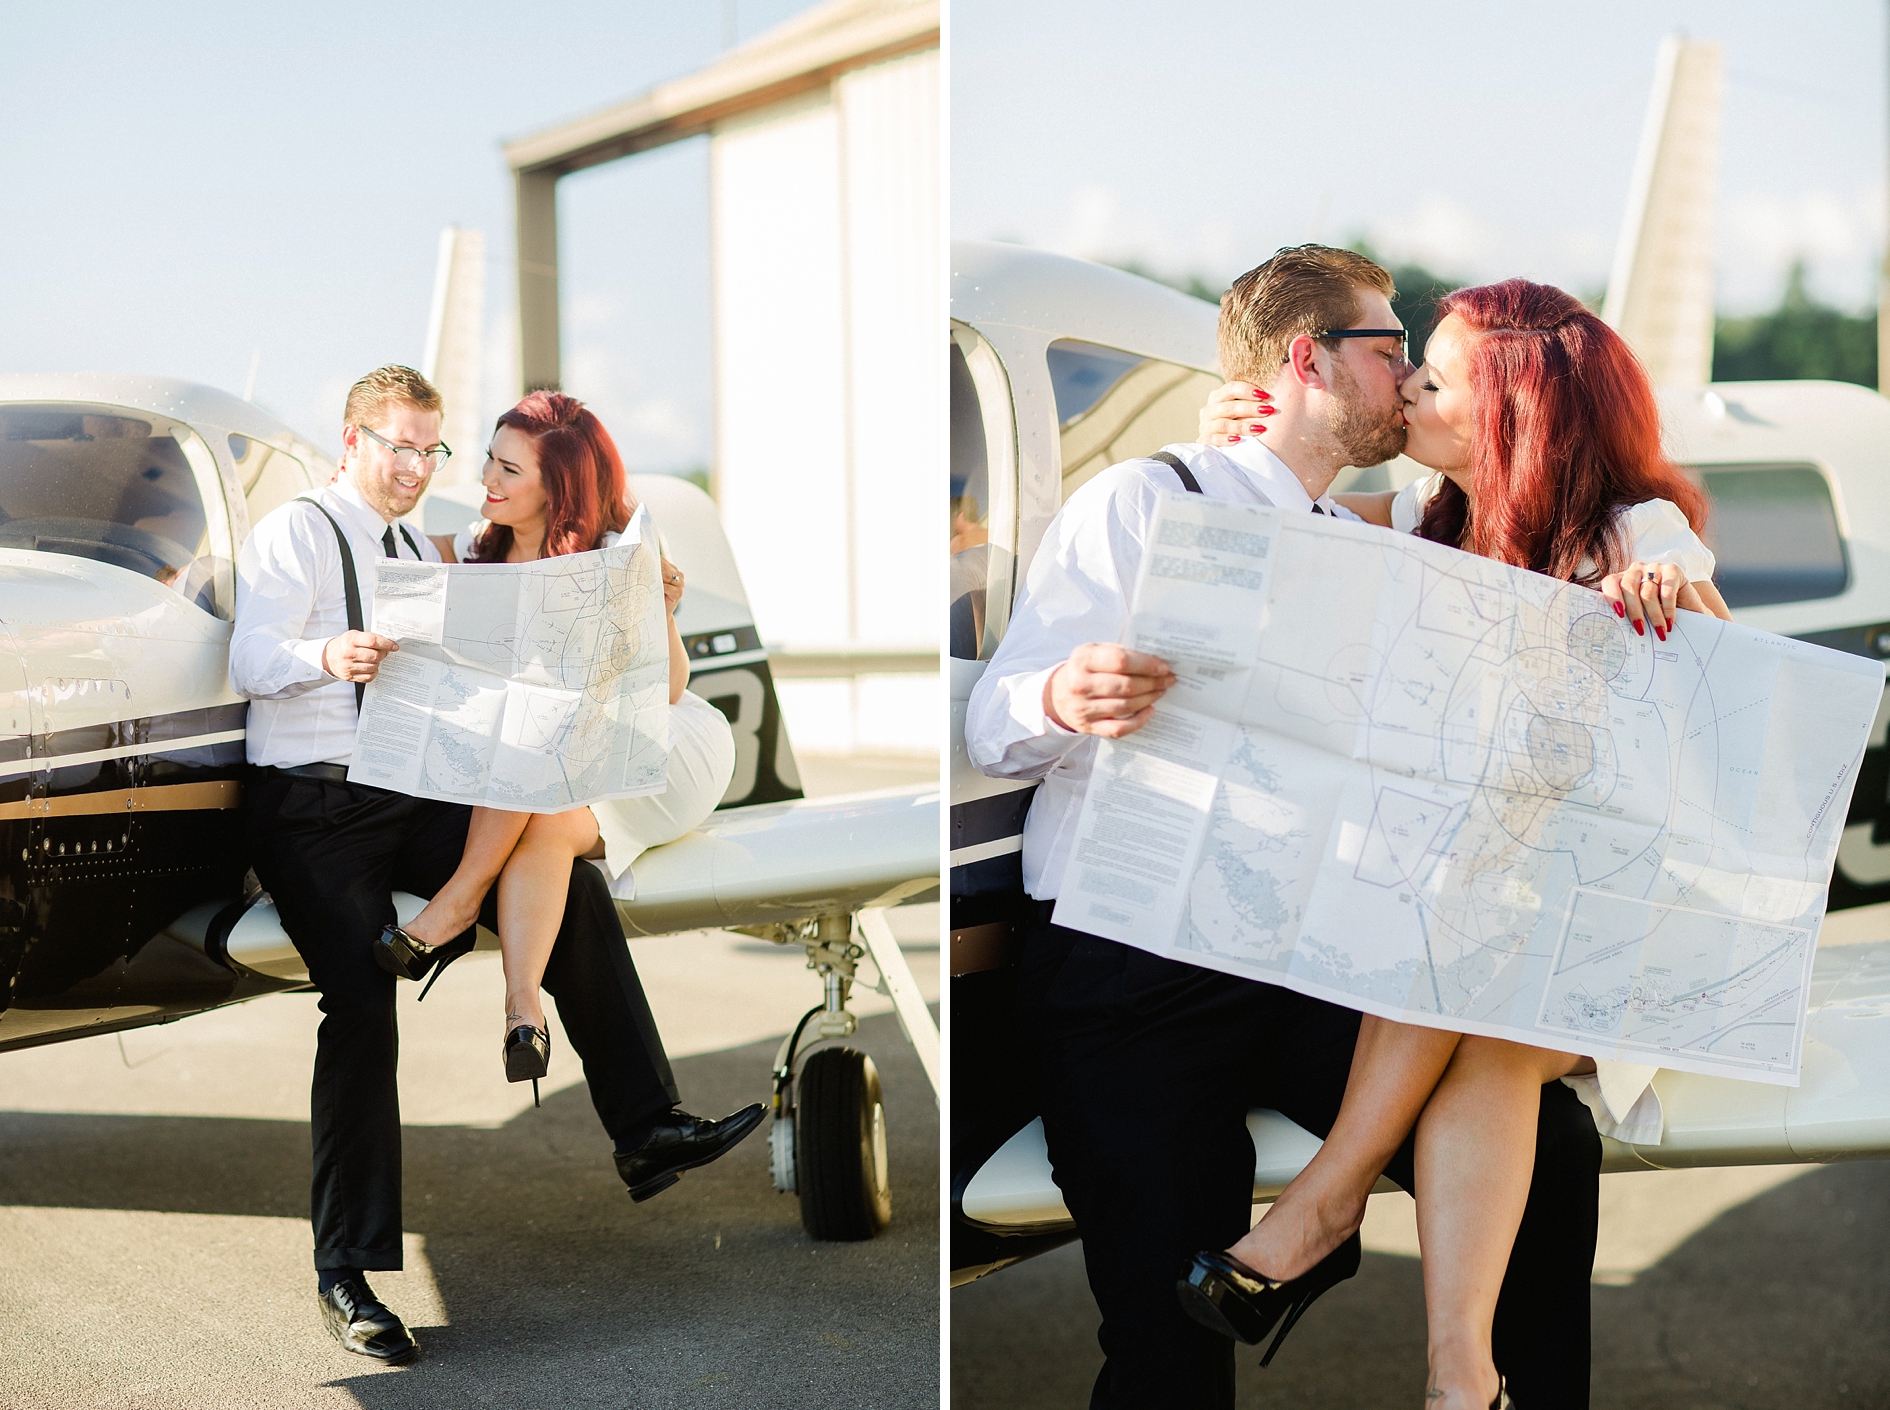 Vintage Airport Engagement | © Ailyn La Torre Photography 2015